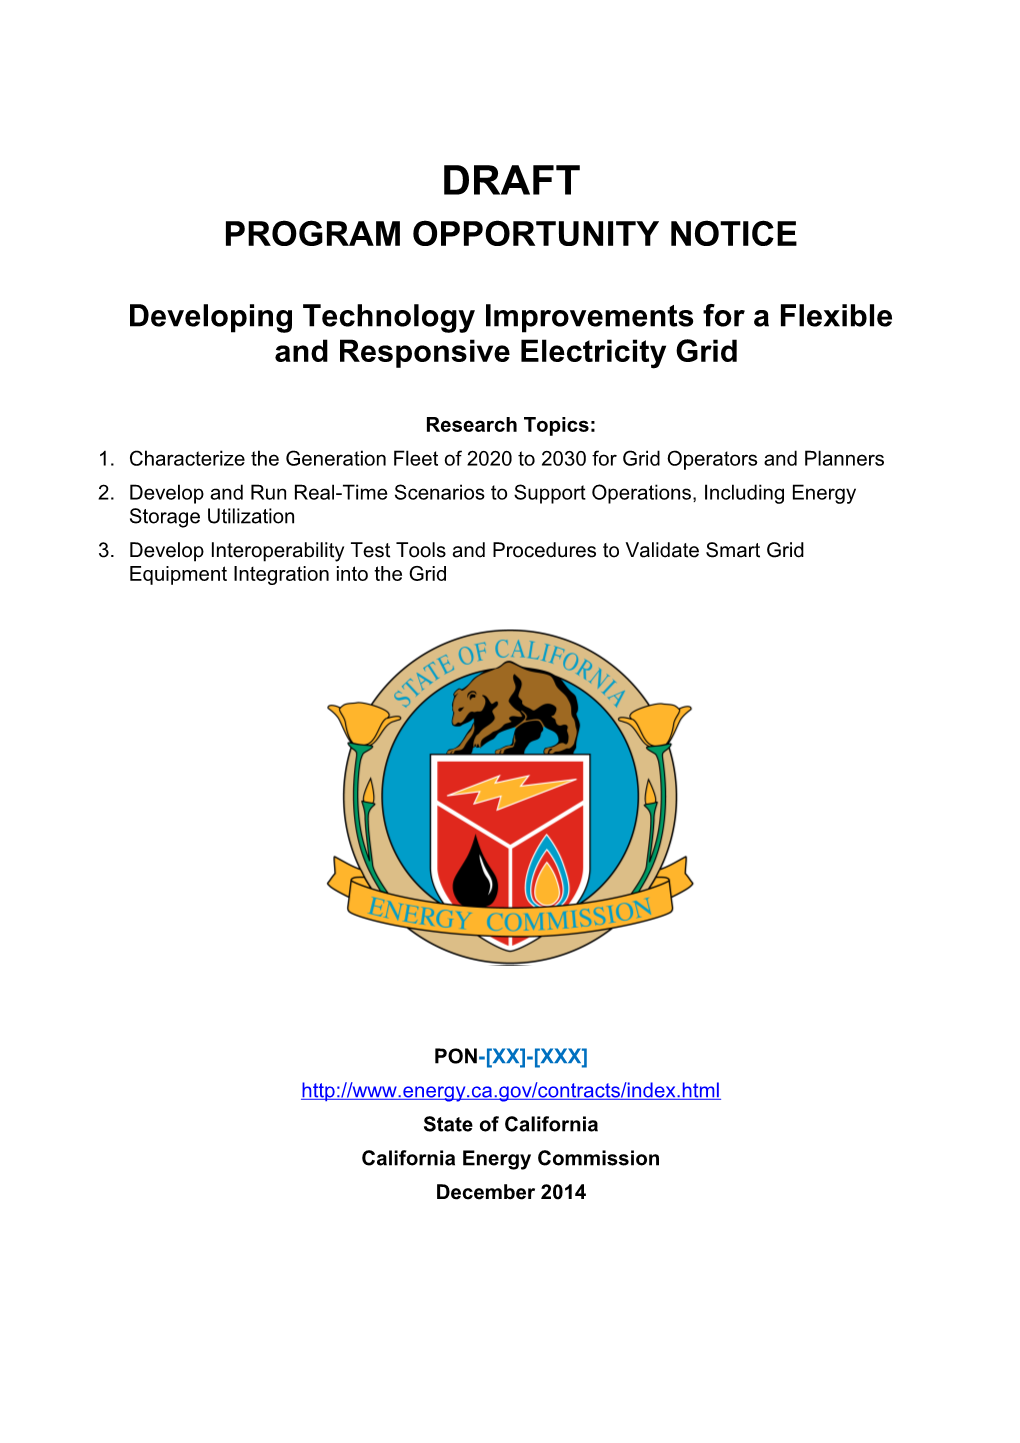 Draft Program Opportunity Notice